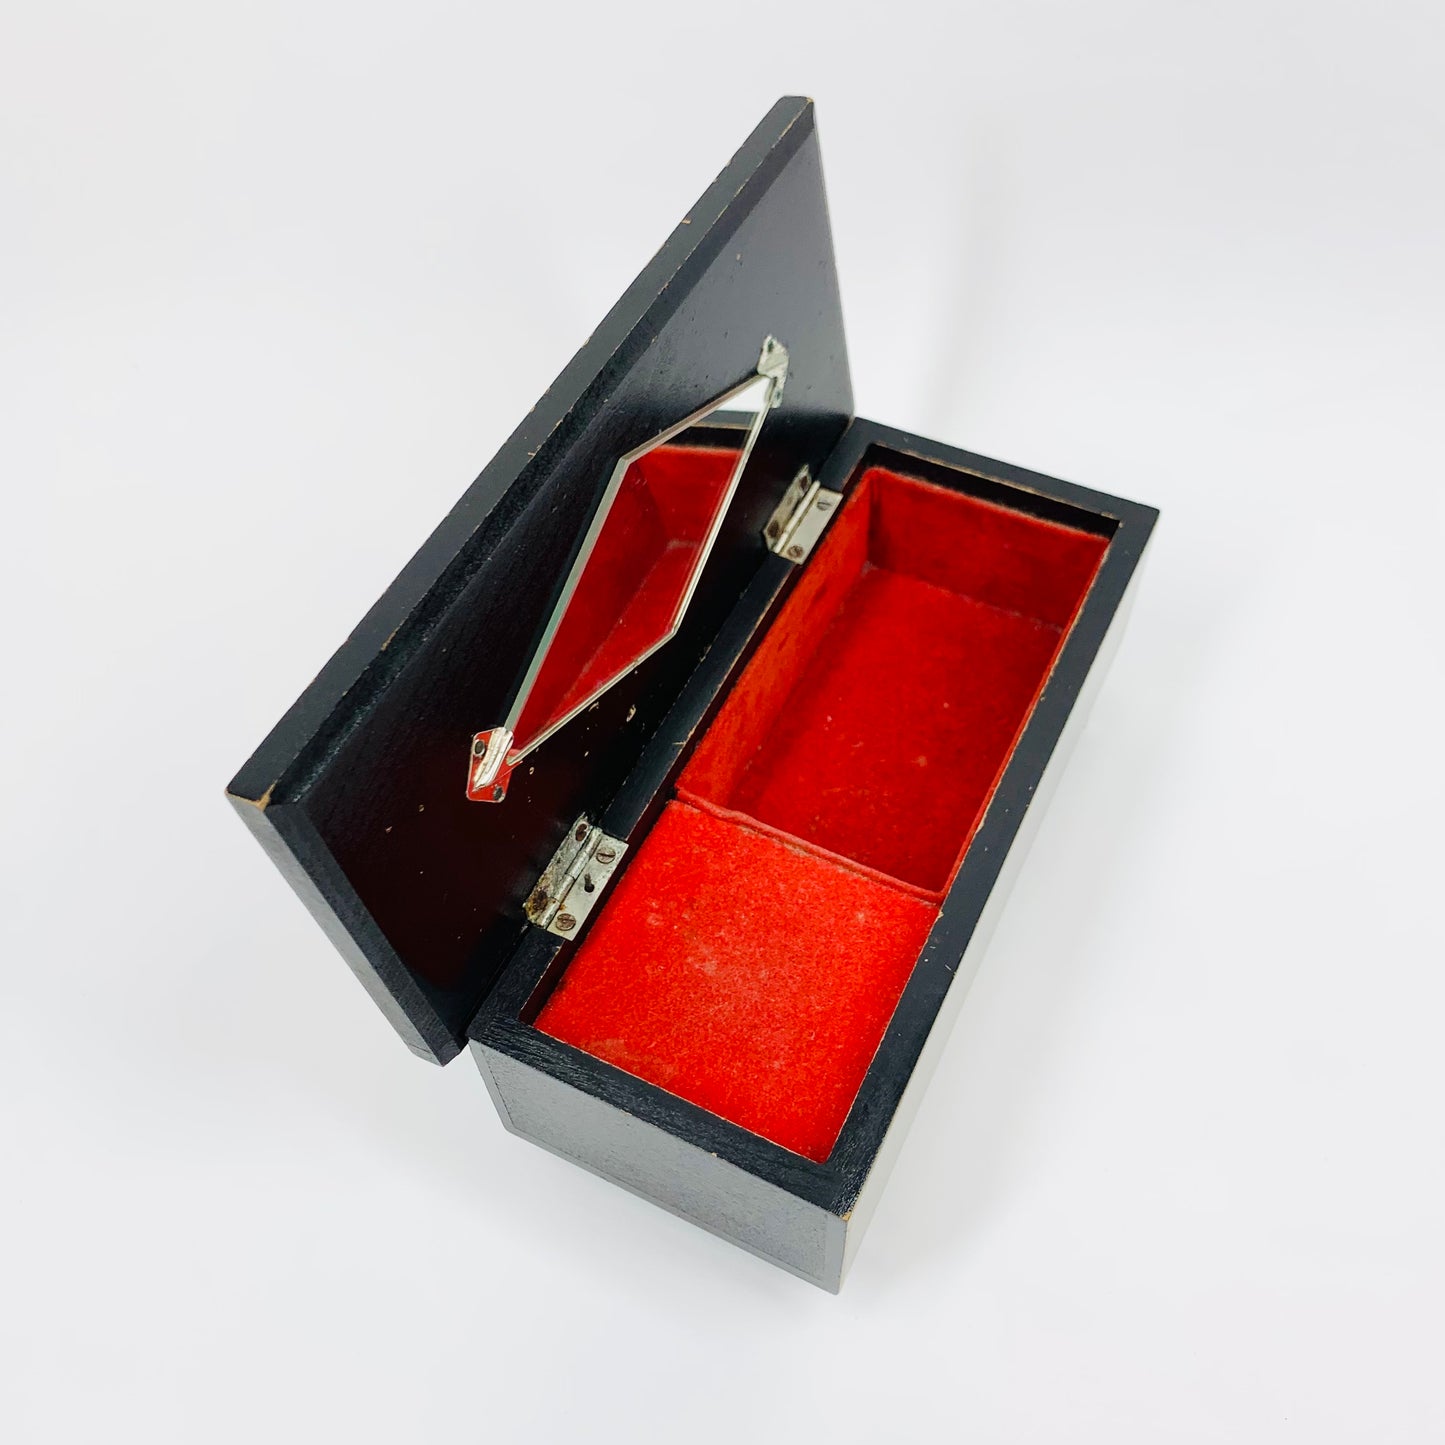 Stunning Midcentury Japanese wood jewellery box with cameo